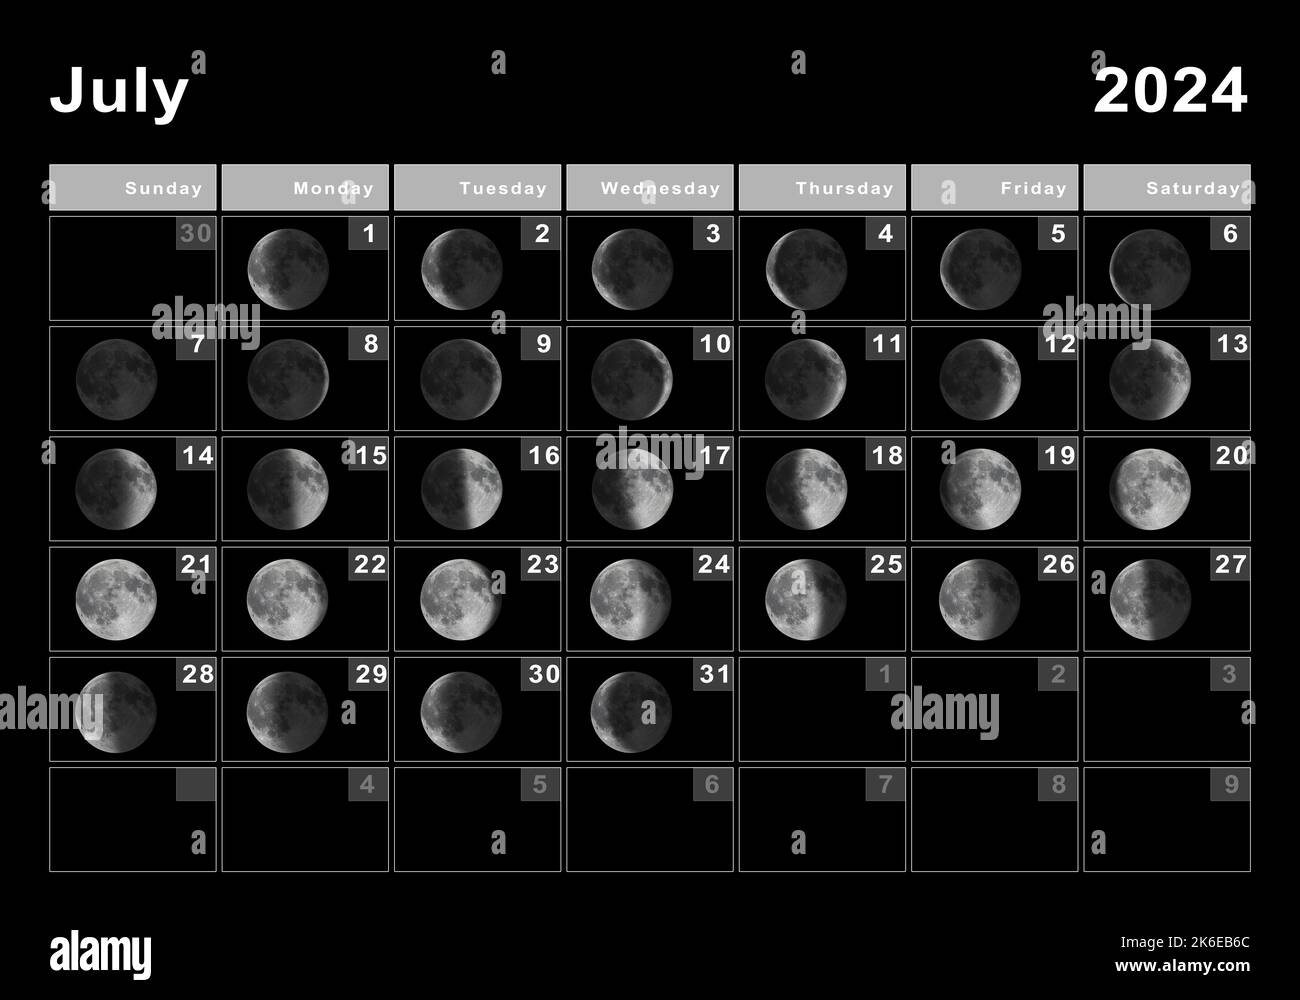 July 2024 Lunar Calendar, Moon Cycles, Moon Phases Stock Photo - Alamy regarding Moon Phase Calendar For July 2024